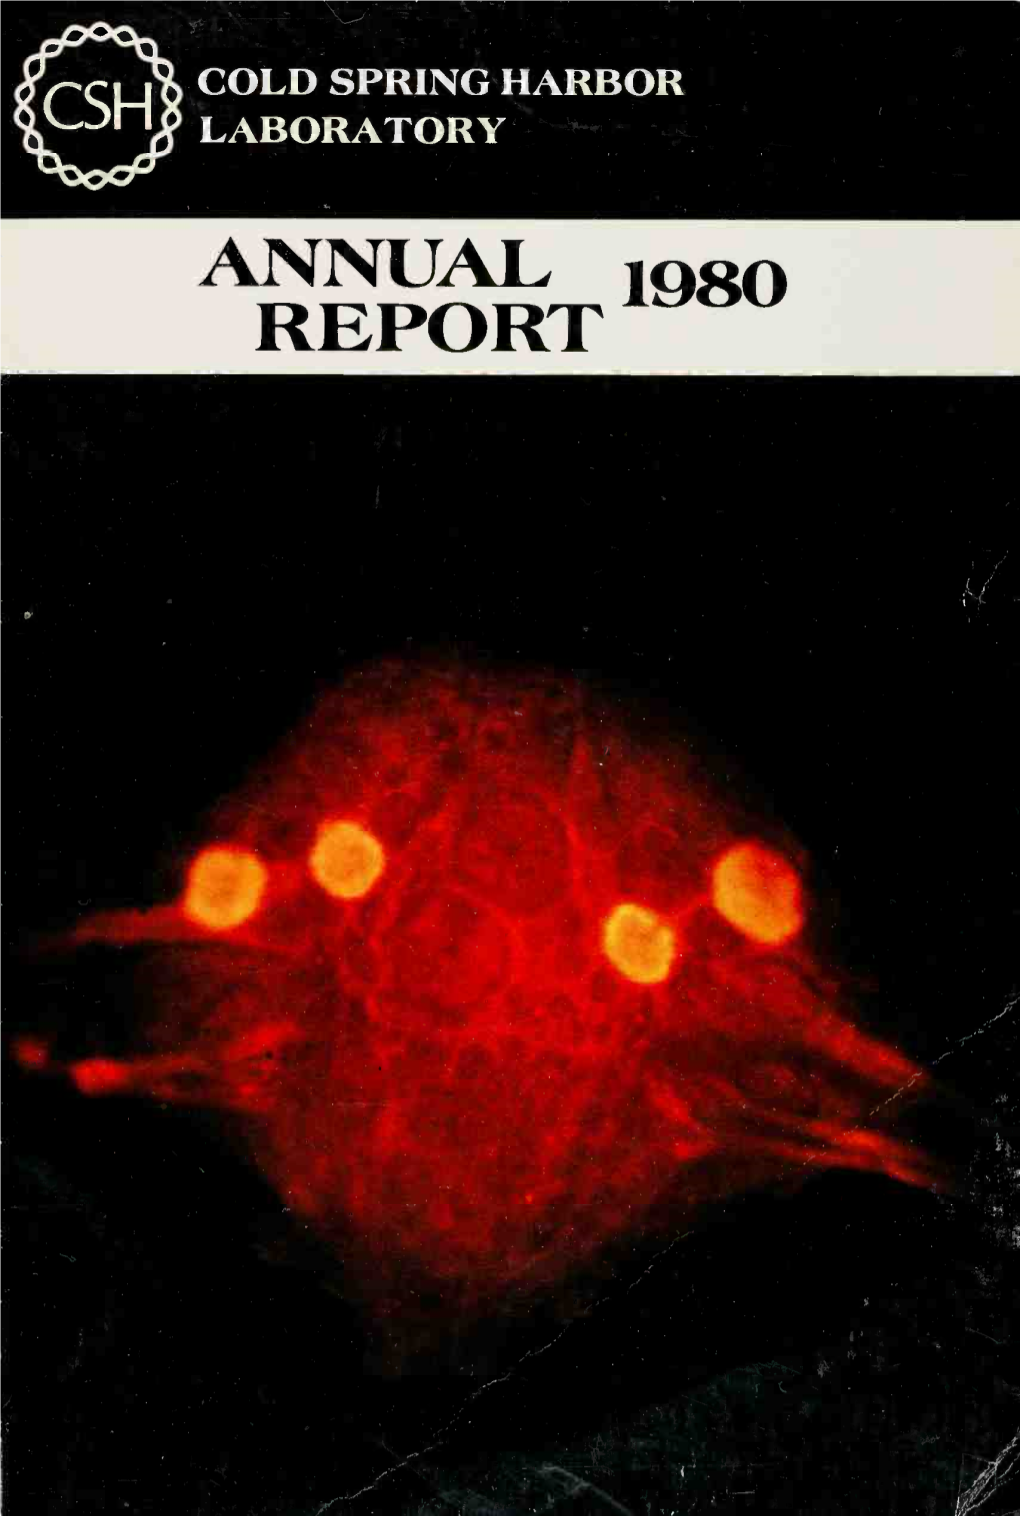 REPORT1980 Cold Spring Harbor Laboratory Box 100, Cold Spring Harbor, New York 11724